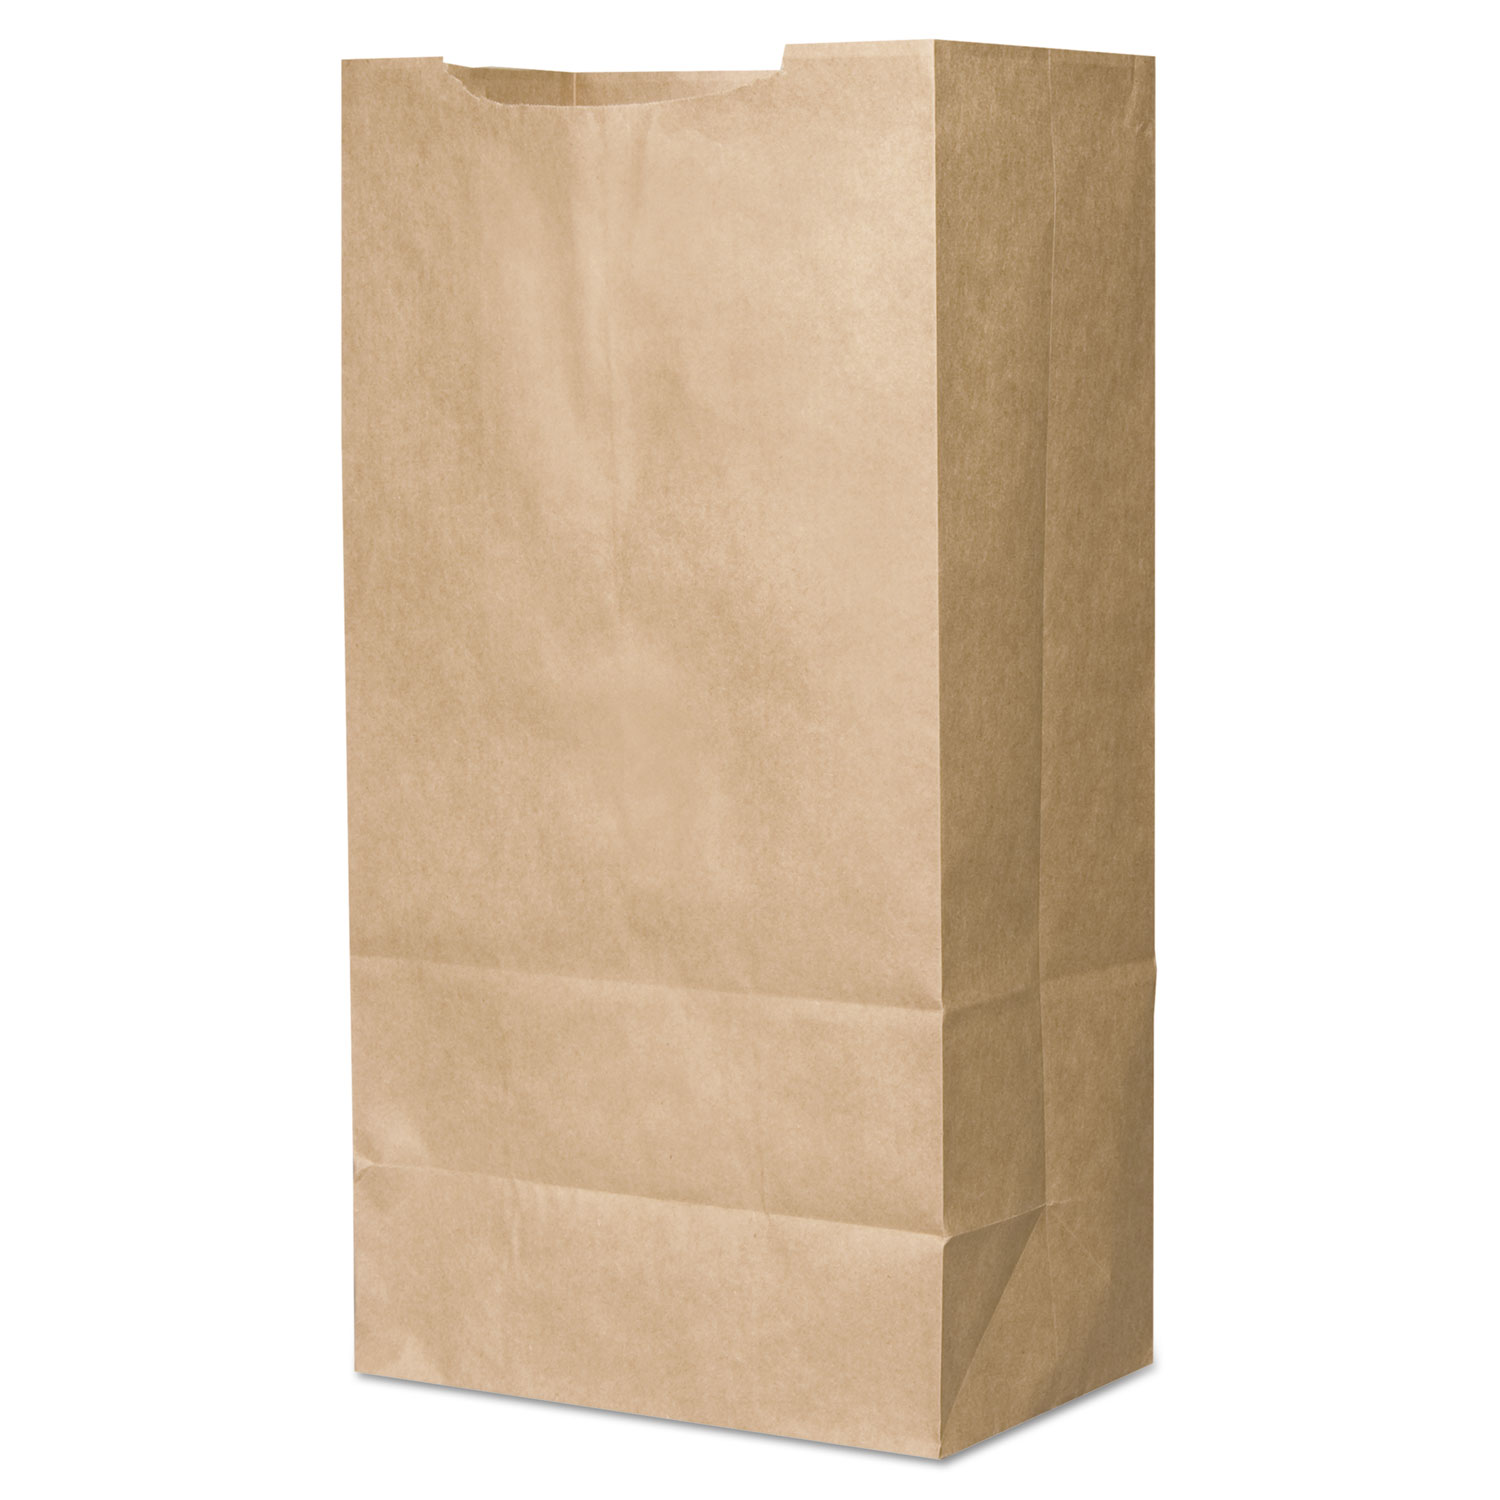  General 84045 Grocery Paper Bags, 66 lbs Capacity, 1/4 BBL, 12w x 7d x 21.75h, Kraft, 250 Bags (BAGSK1466SOST) 